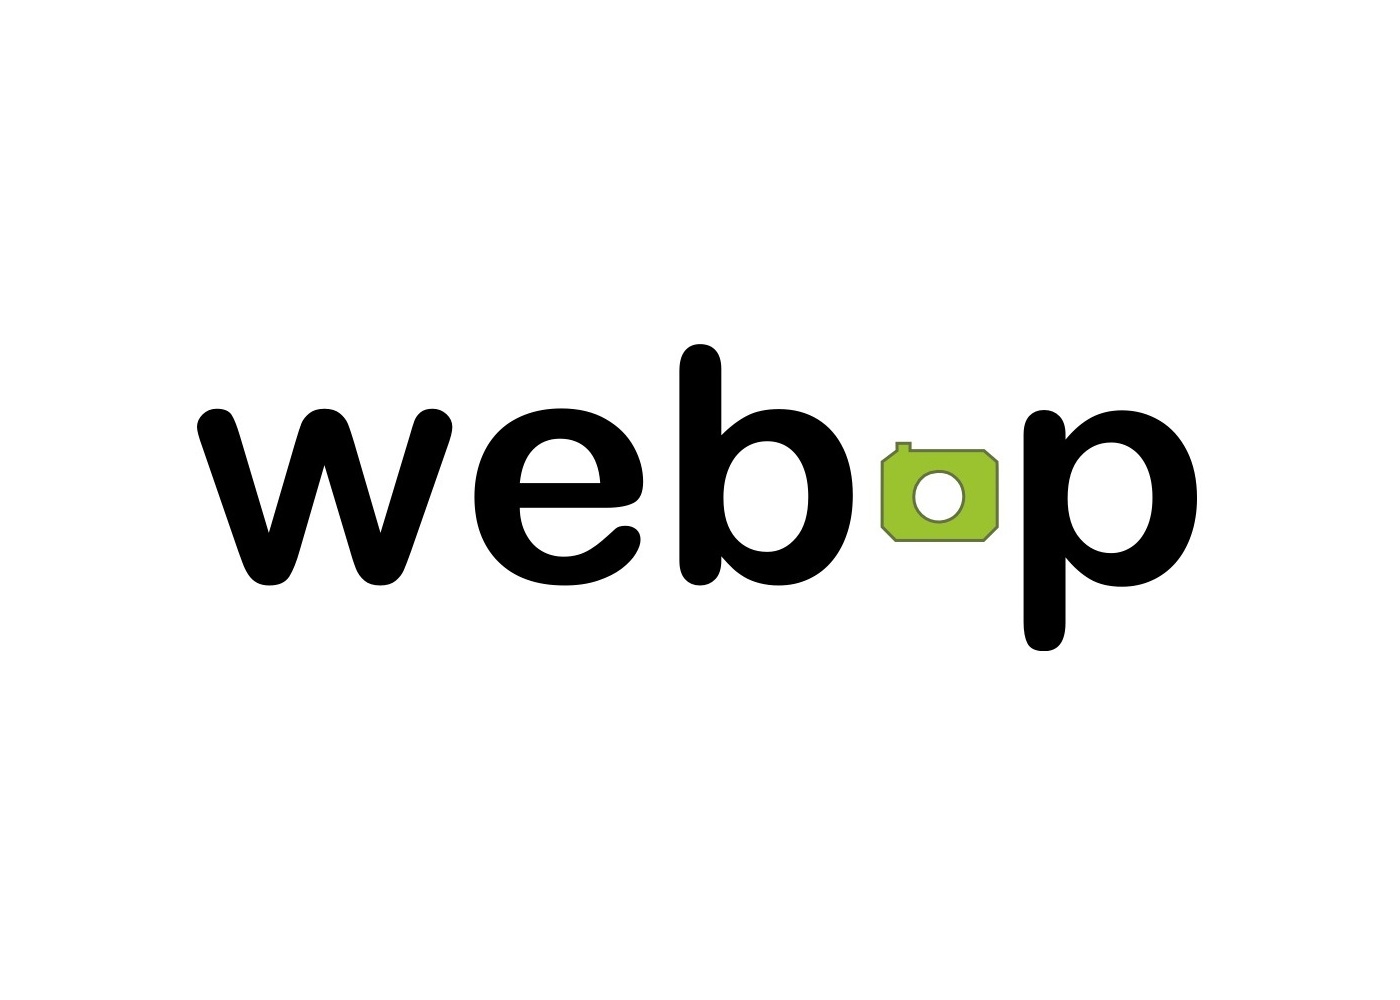 Webp in png. Webp. Webp изображения. Формат webp. Формат webp логотип.